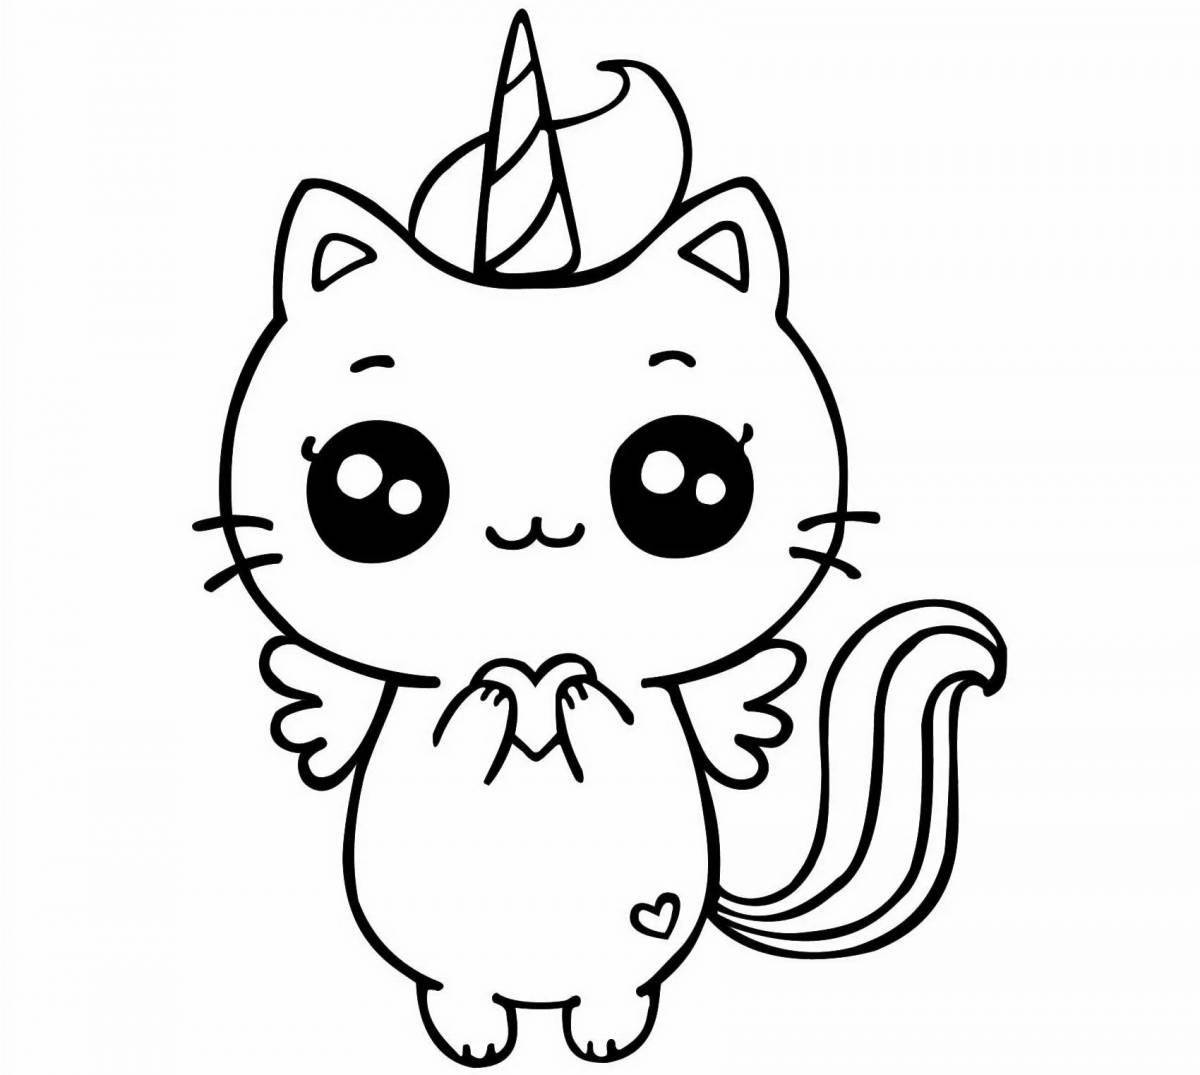 Adorable cute cat drawing